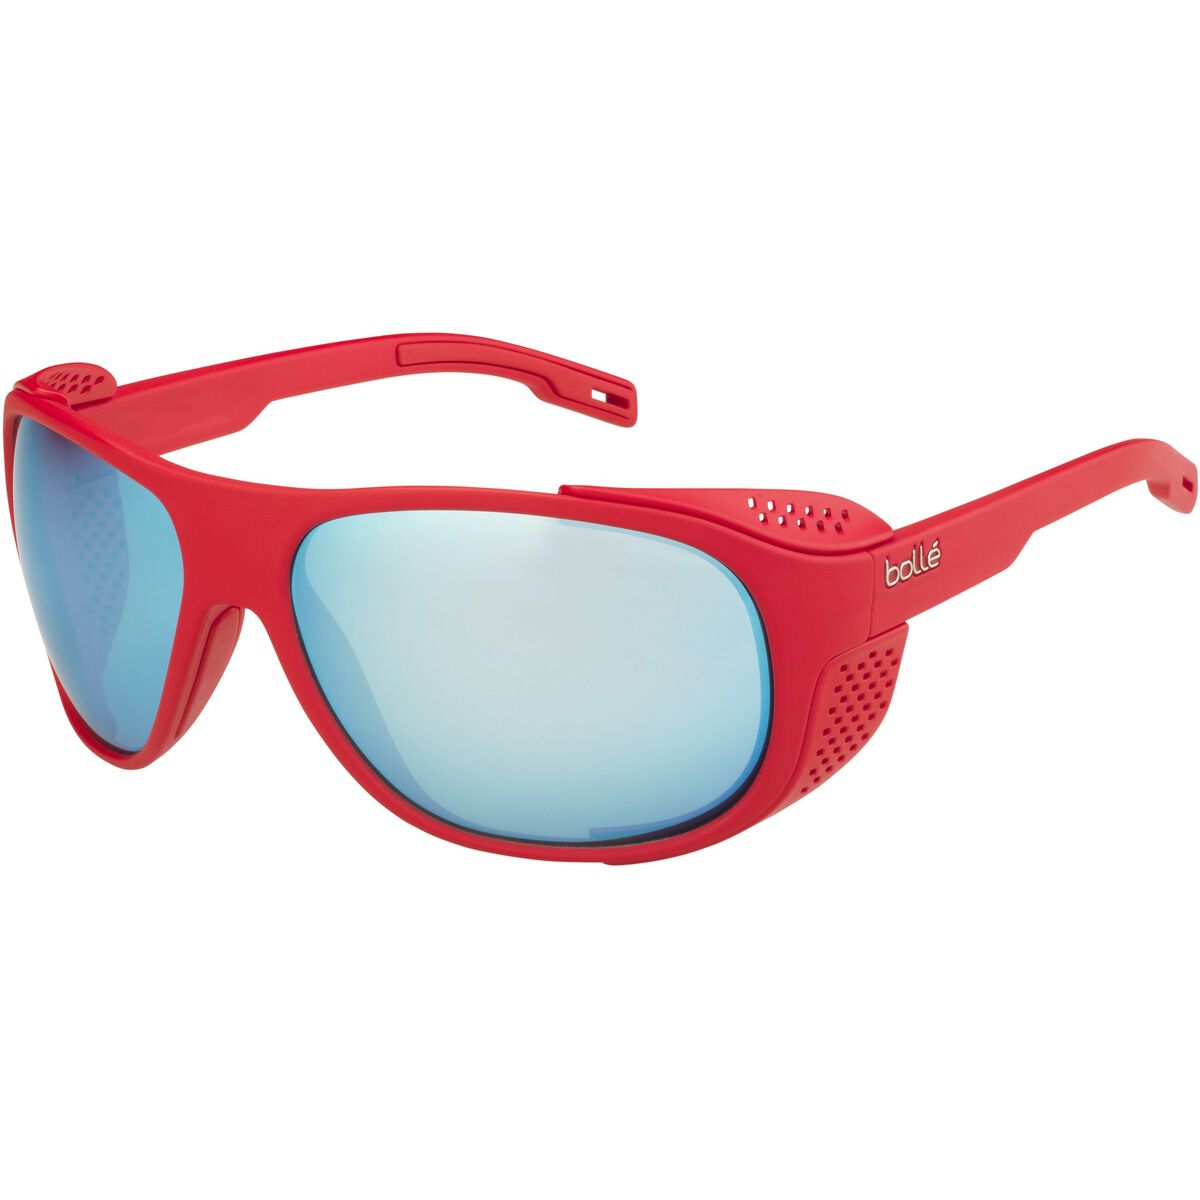 Bollé GRAPHITE Mountaineering Sunglasses - NXT® Photochromic Lens